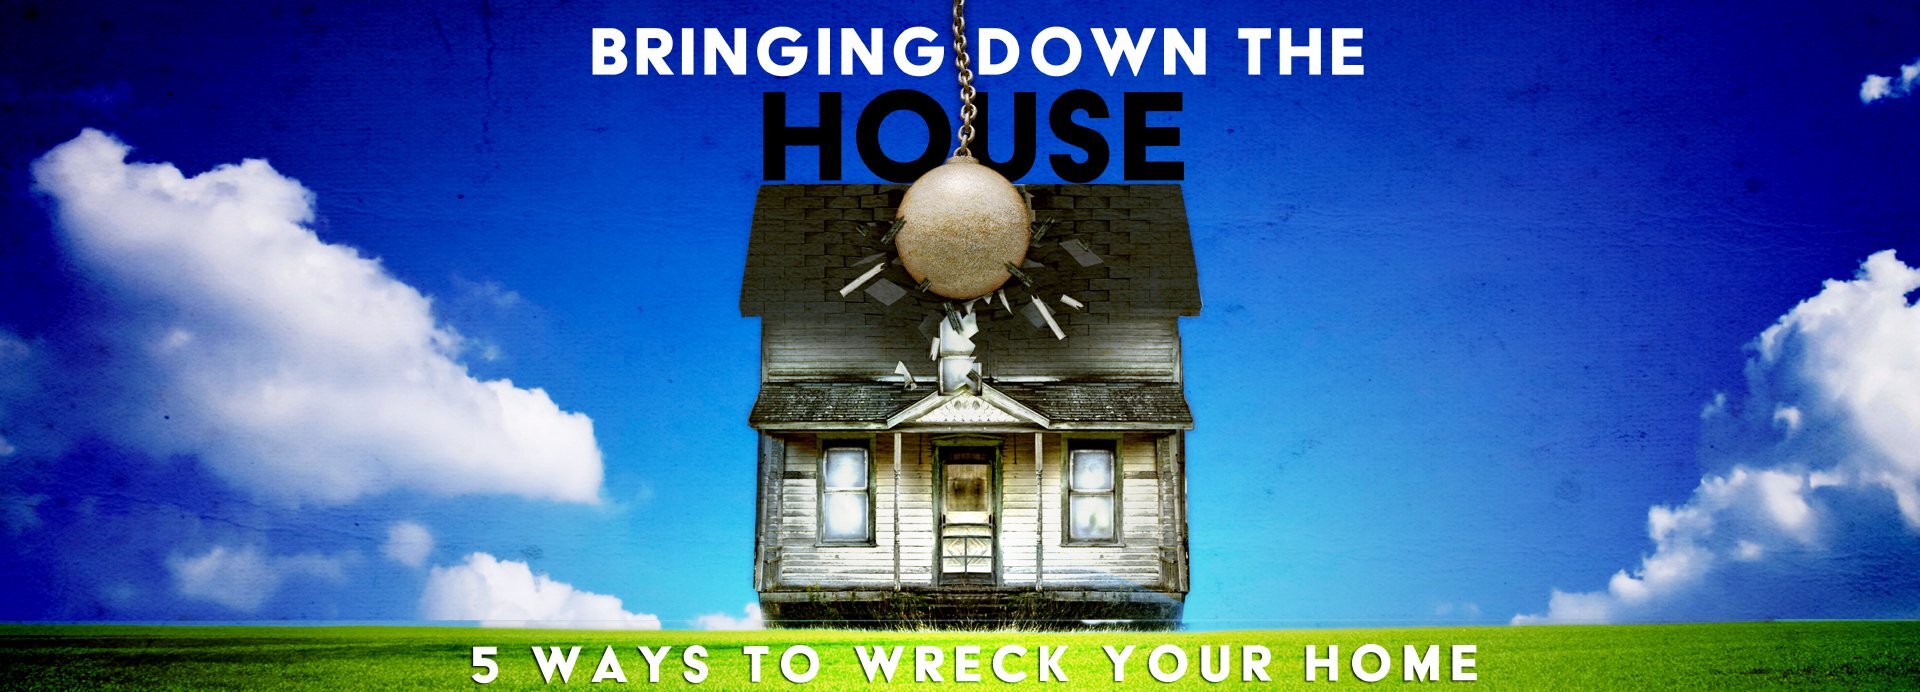 6-Bringing Down the House.jpg